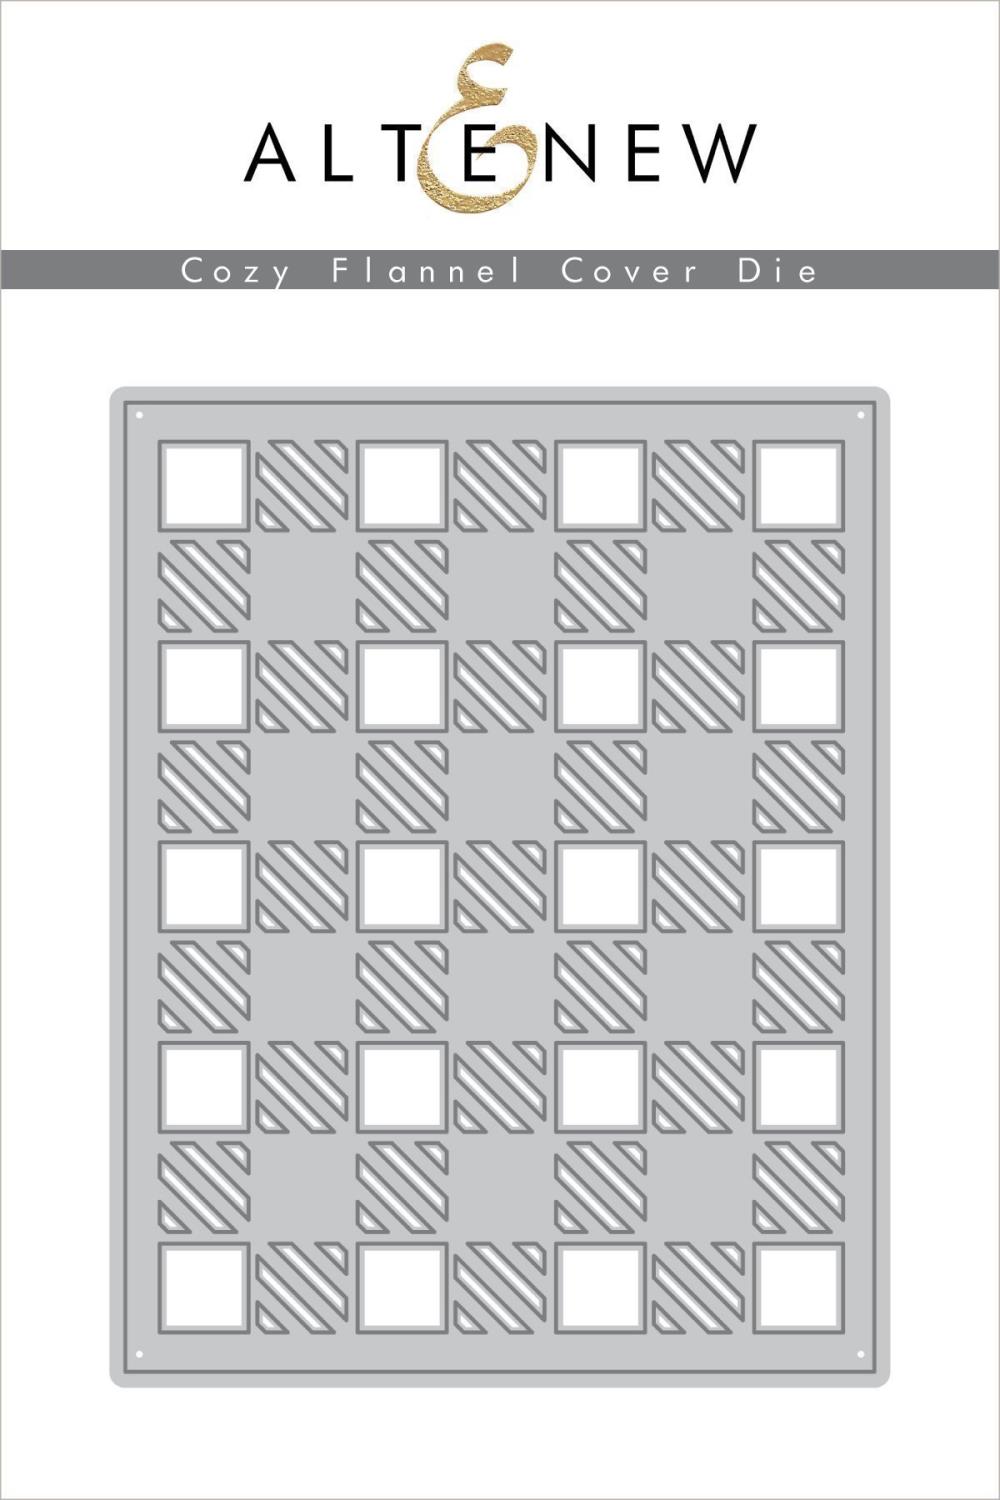 Altenew - Cozy Flannel Cover Die